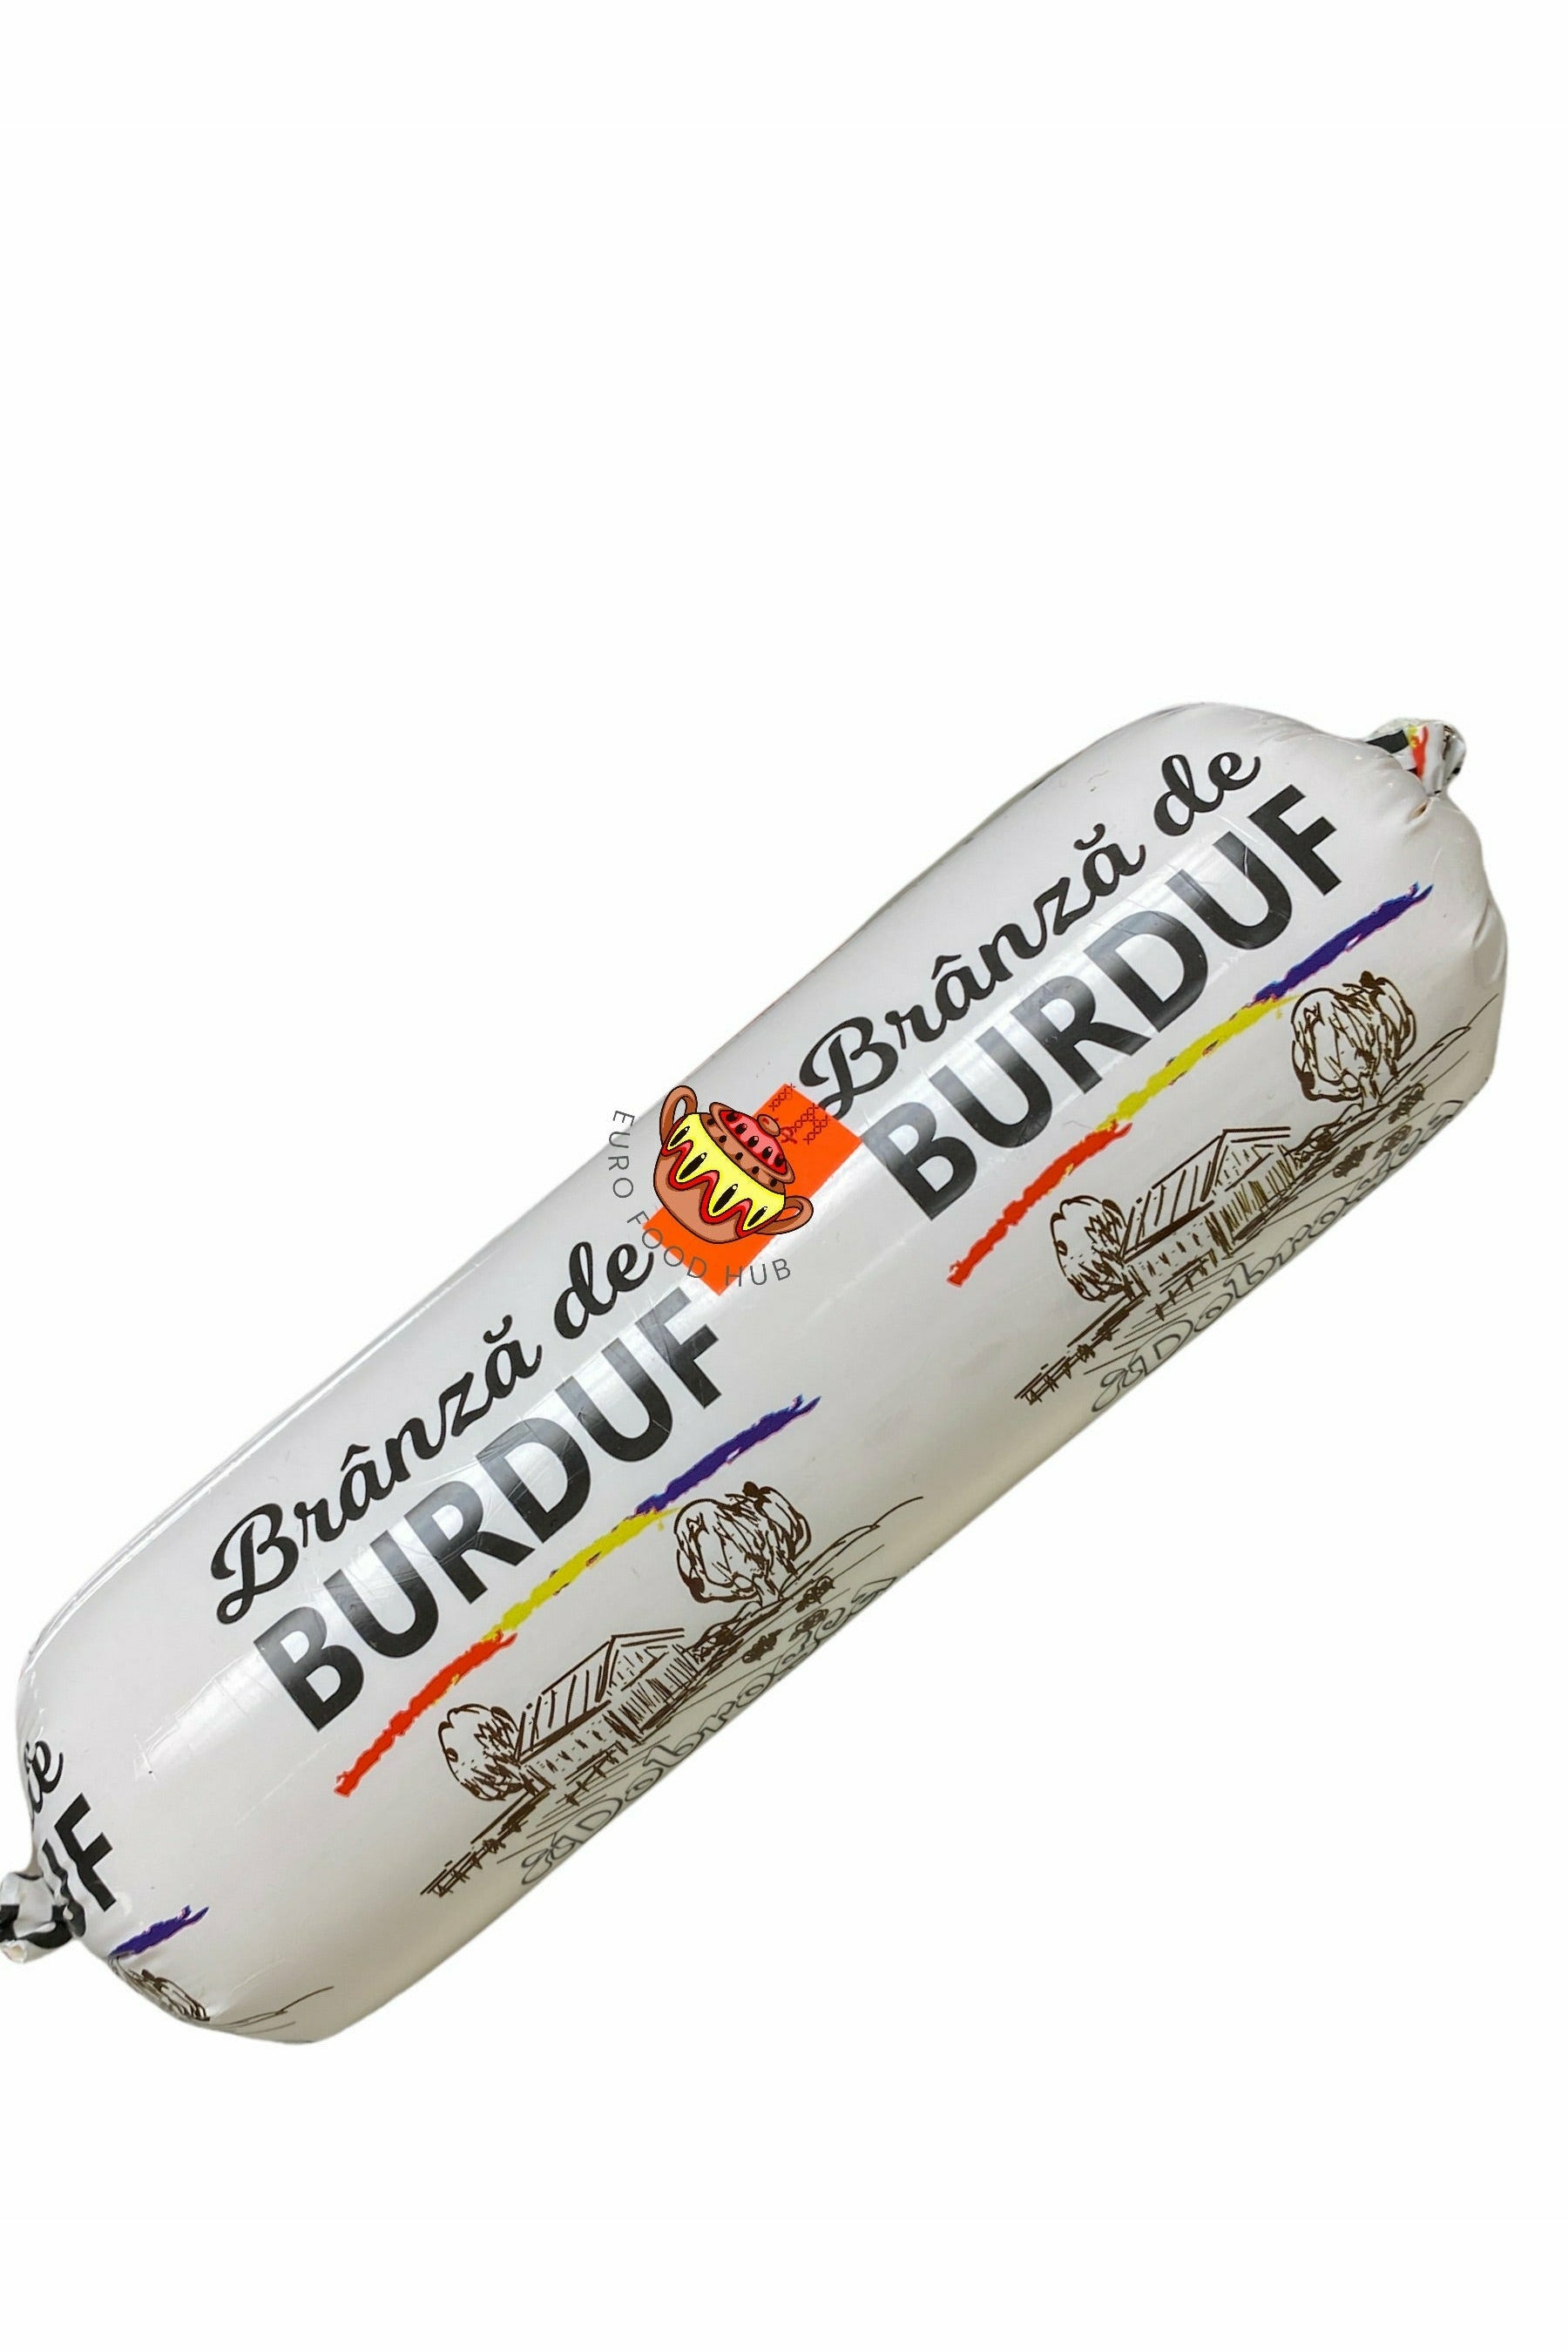 Dobrogea Branza de BURDUF Cheese - 450g - Best By 3.29.2024